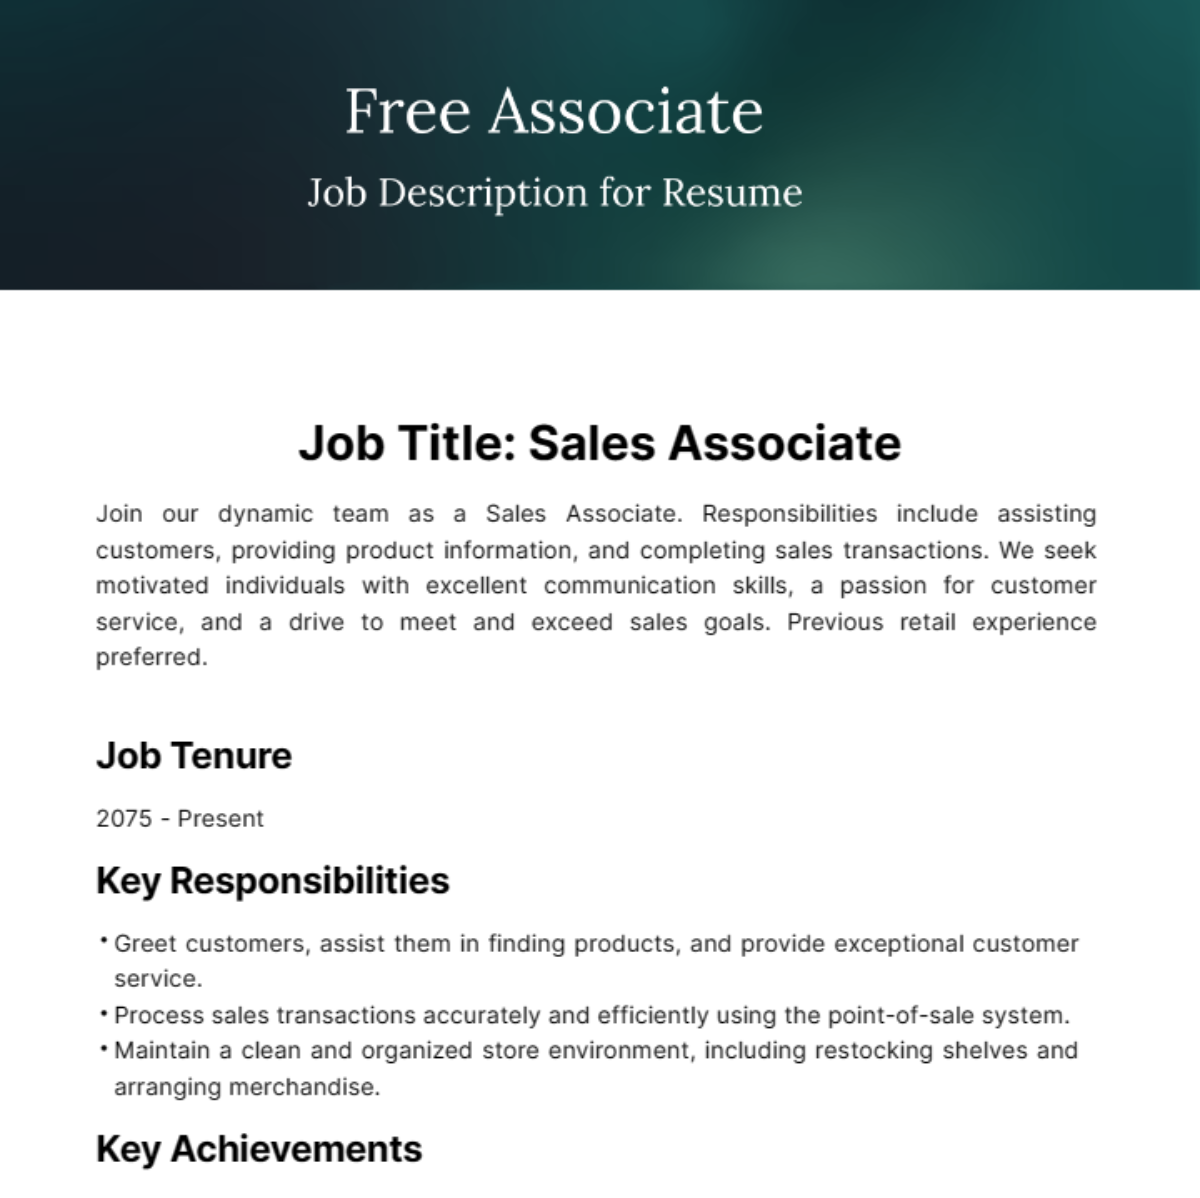 Associate Job Description for Resume Template